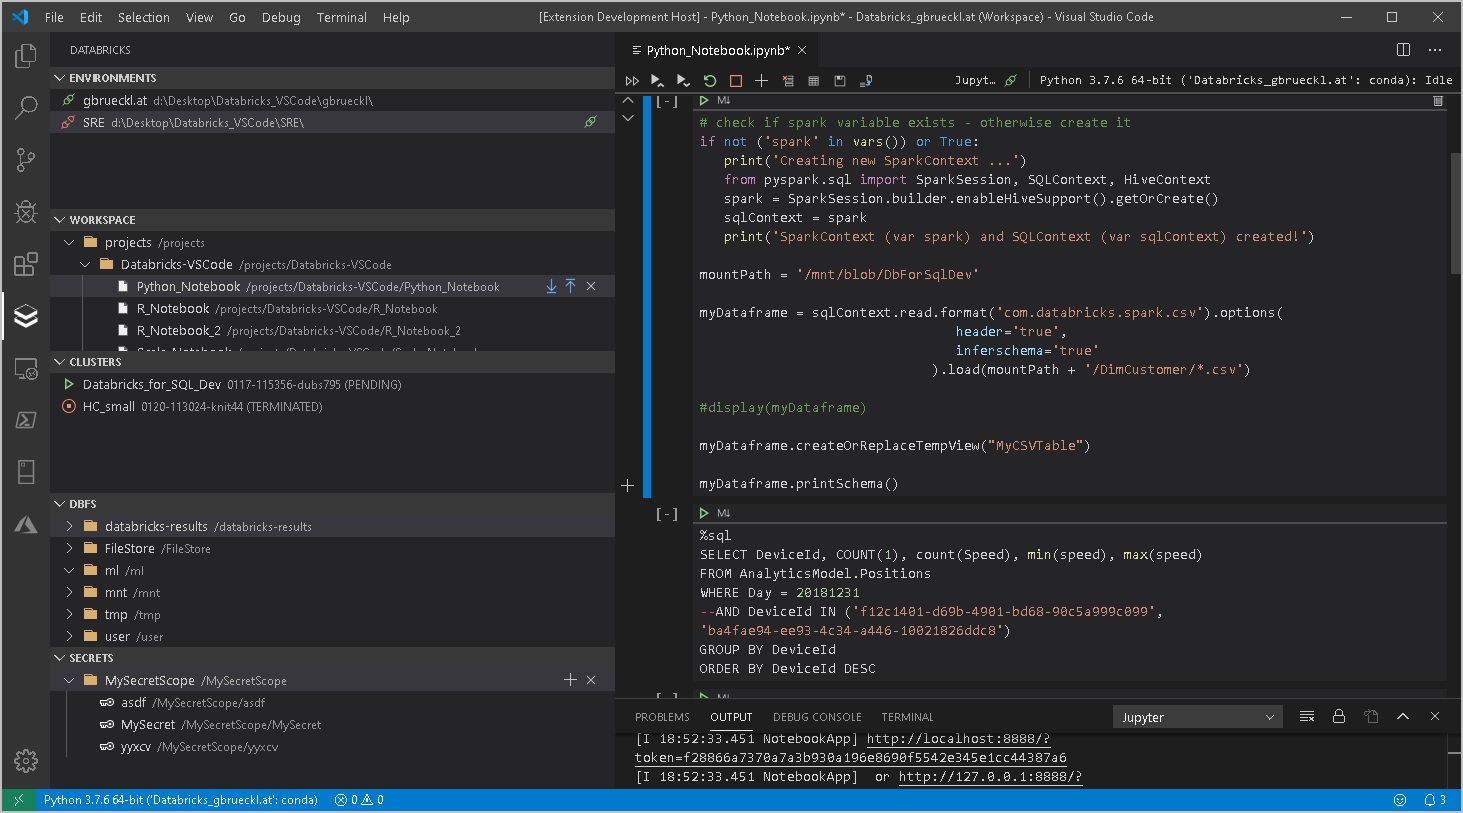 Professional Development For Databricks With Visual Studio Code